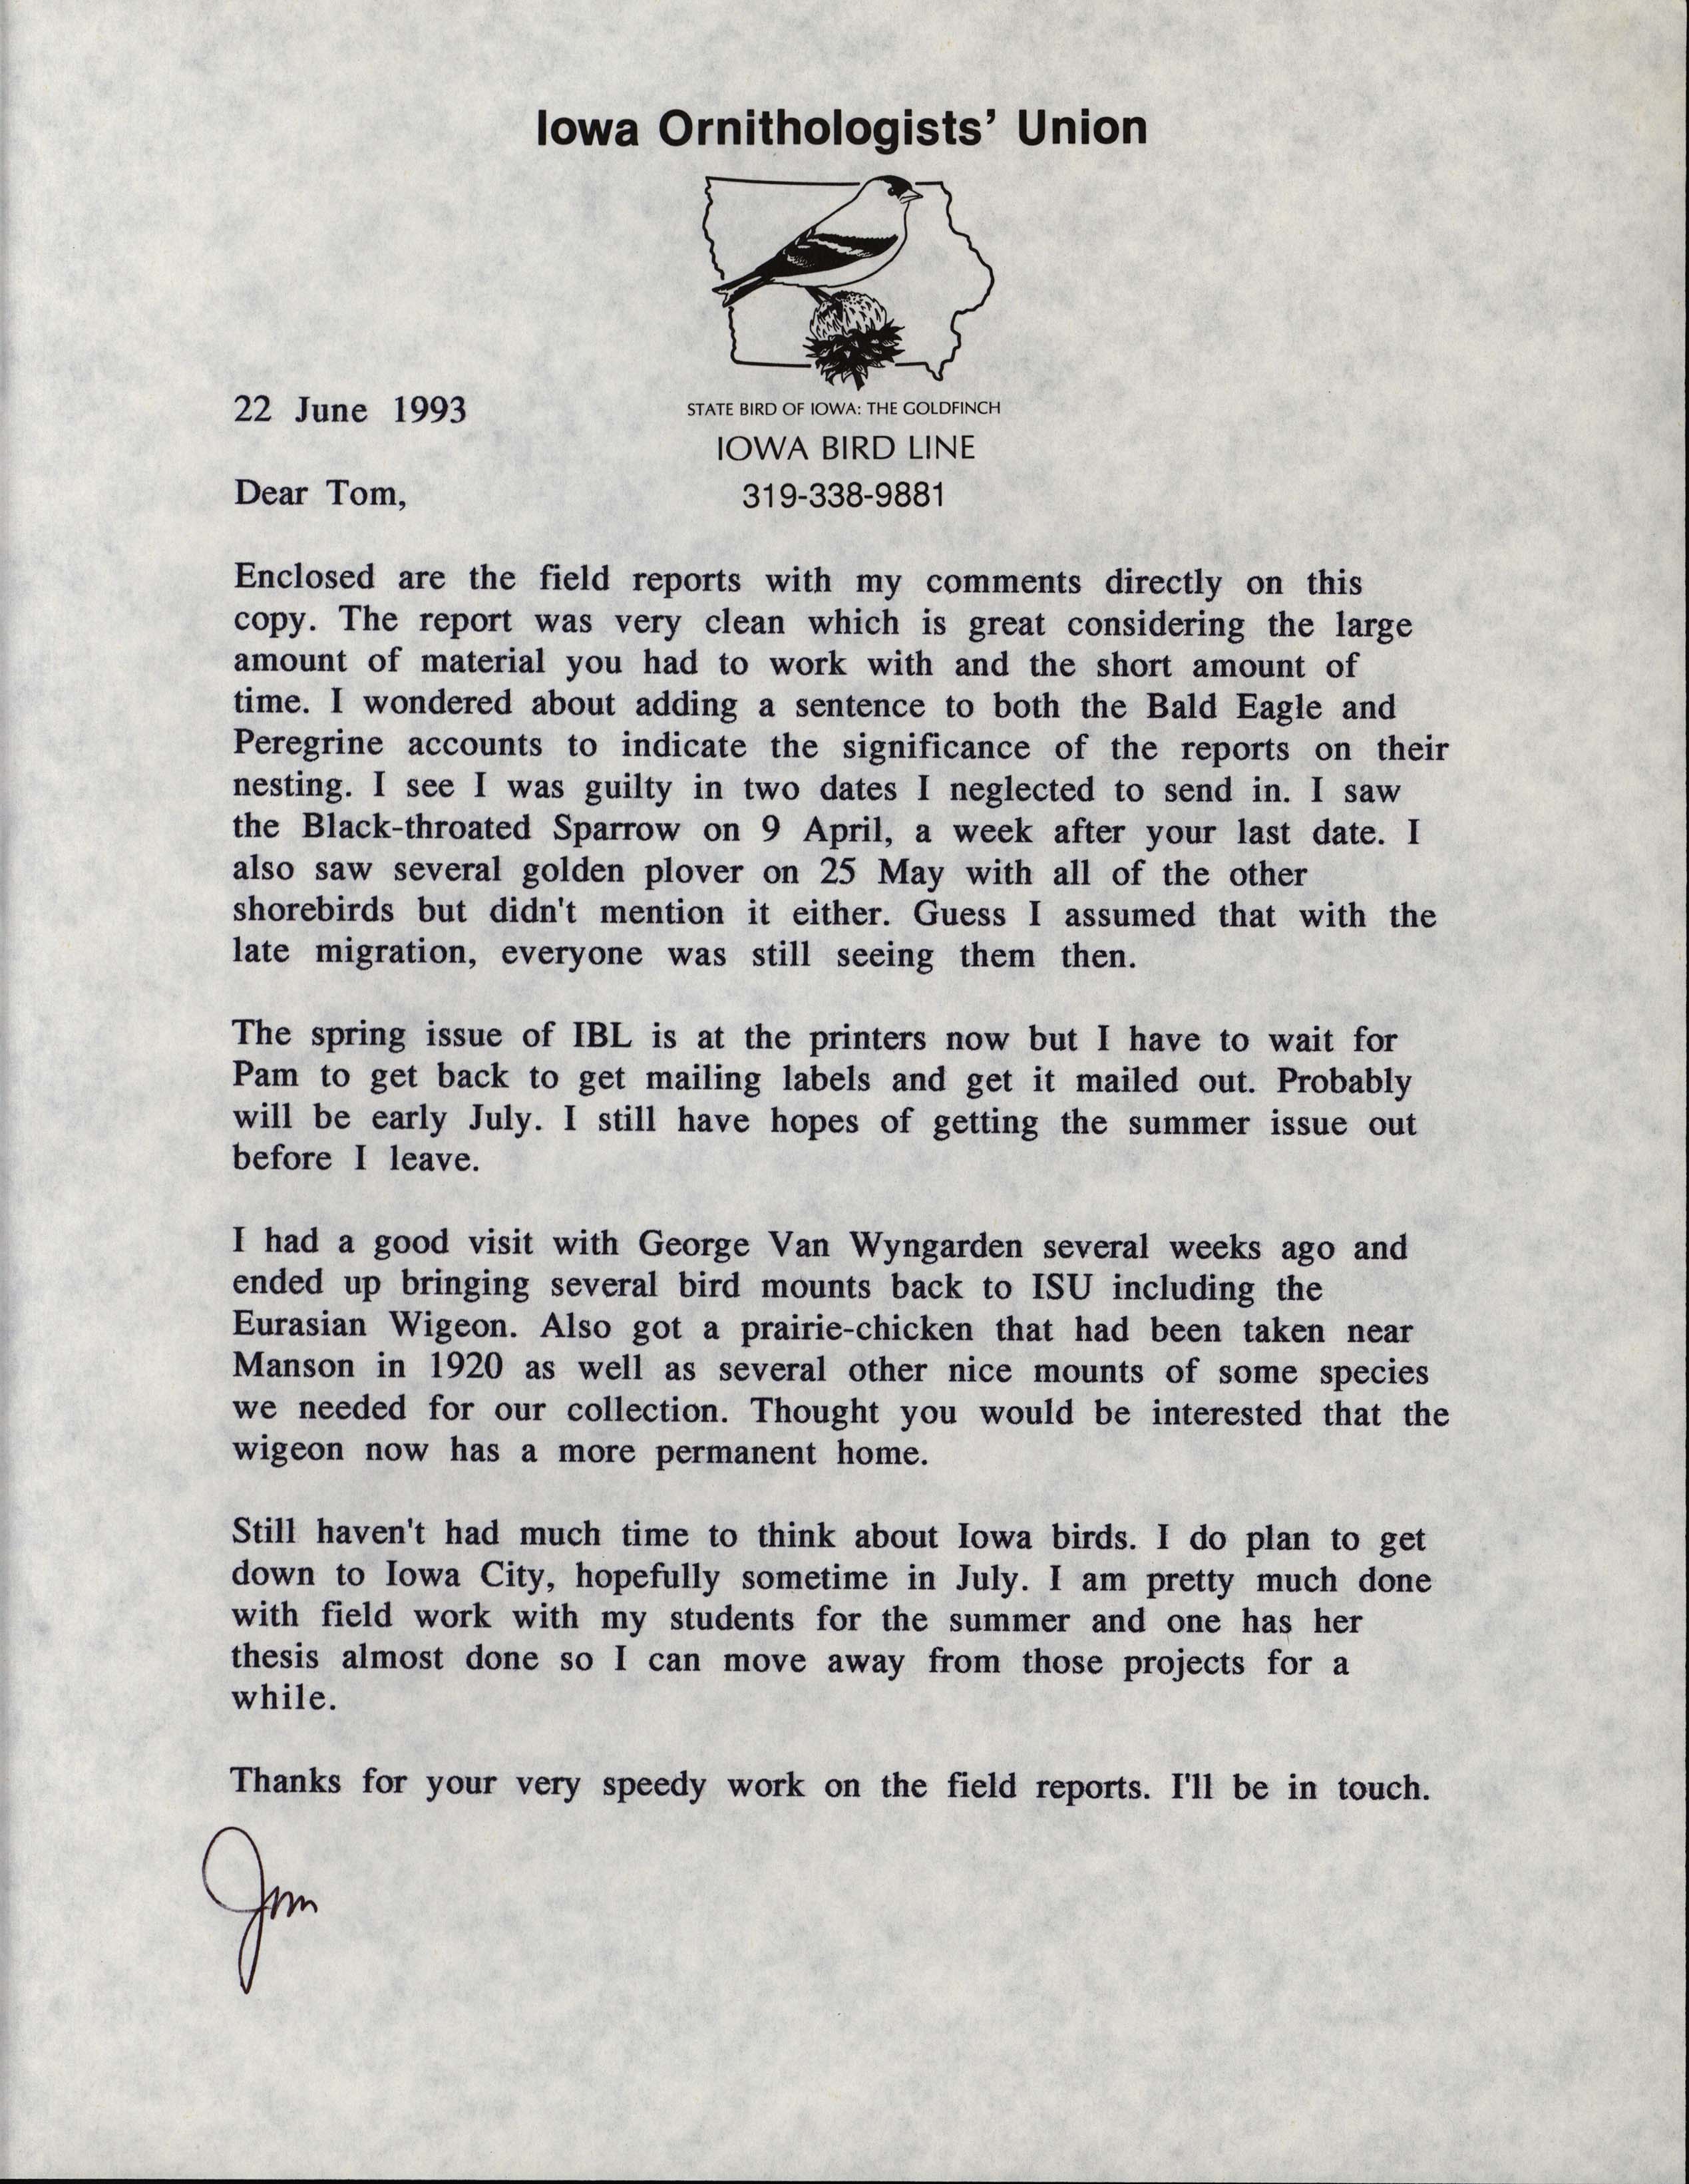 Jim Dinsmore letter to Thomas Kent regarding field reports, June 22, 1993